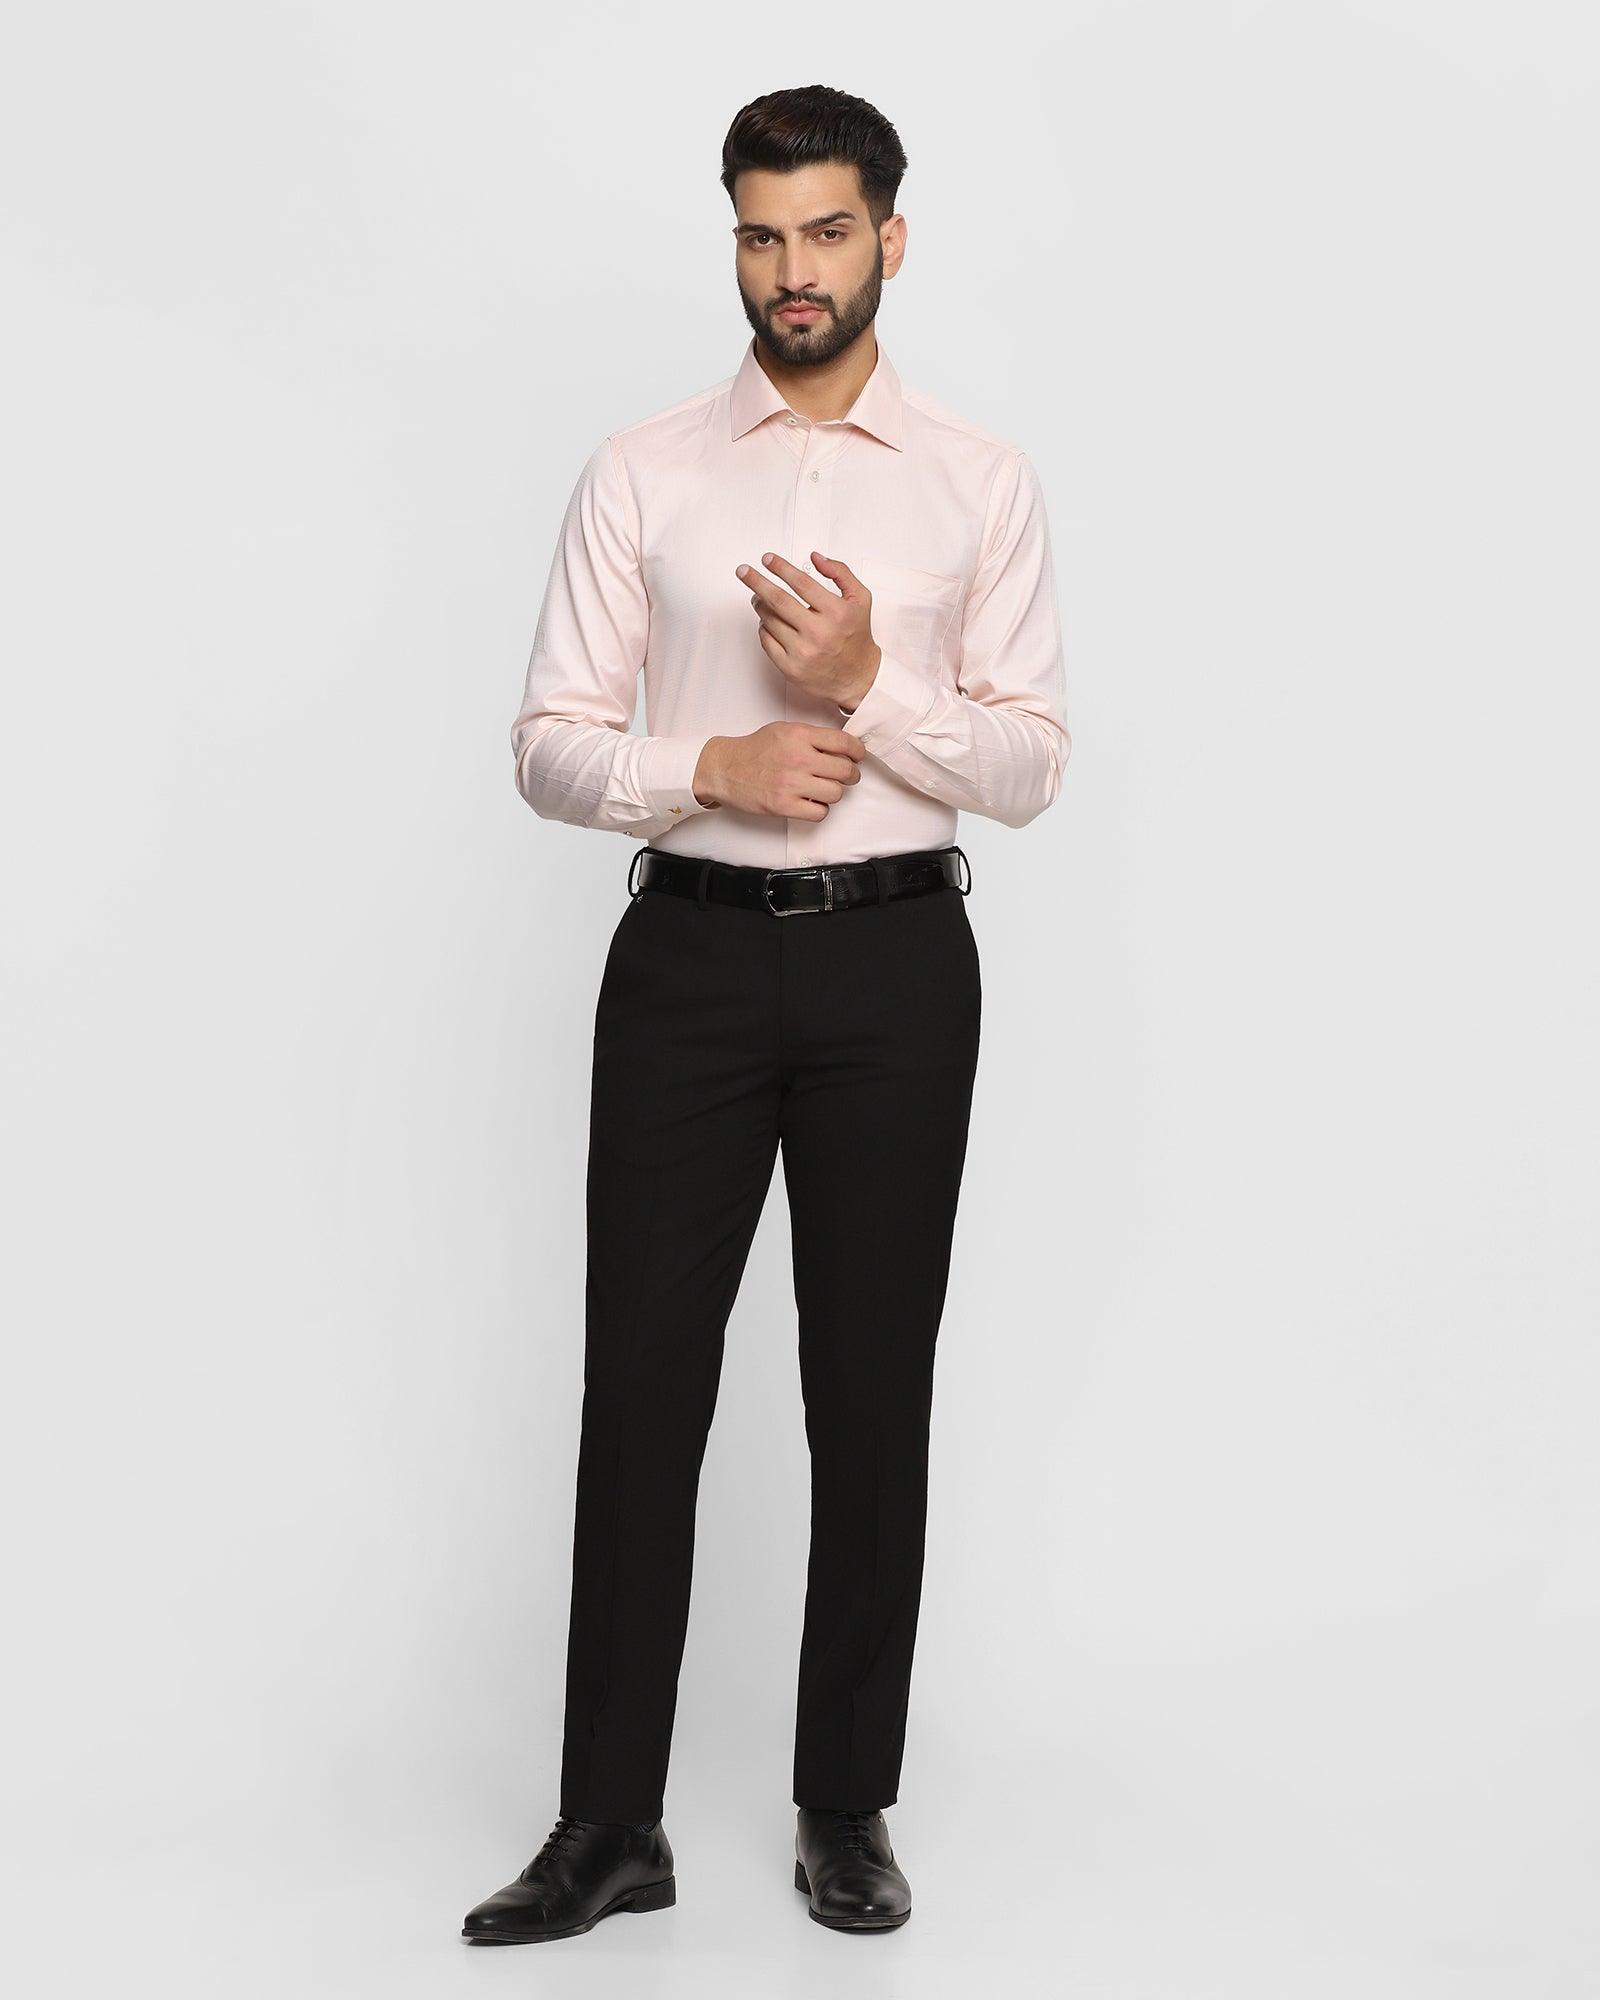 Slim Fit B-91 Formal Black Textured Trouser - Cairon